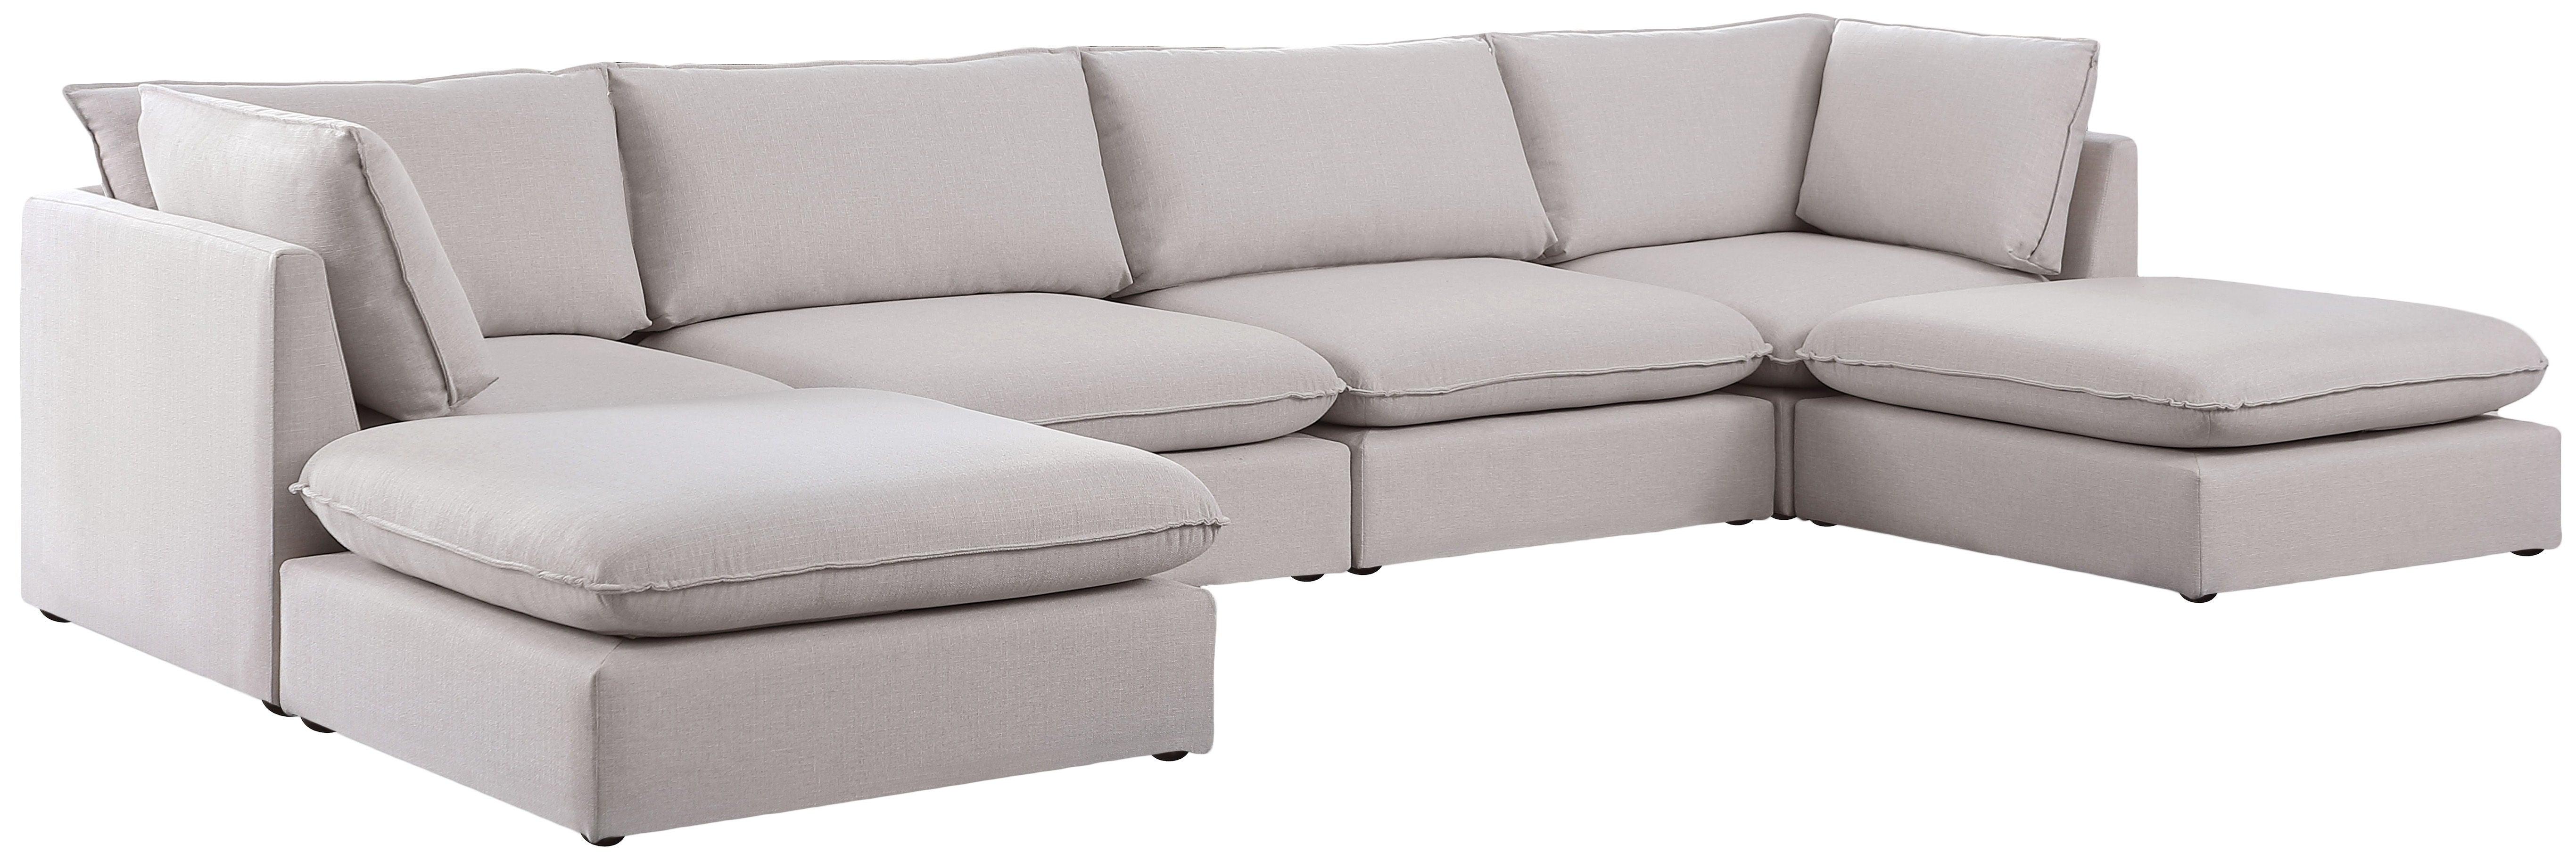 Meridian Furniture - Mackenzie - Modular Sectional 6 Piece - Beige - Fabric - Modern & Contemporary - 5th Avenue Furniture